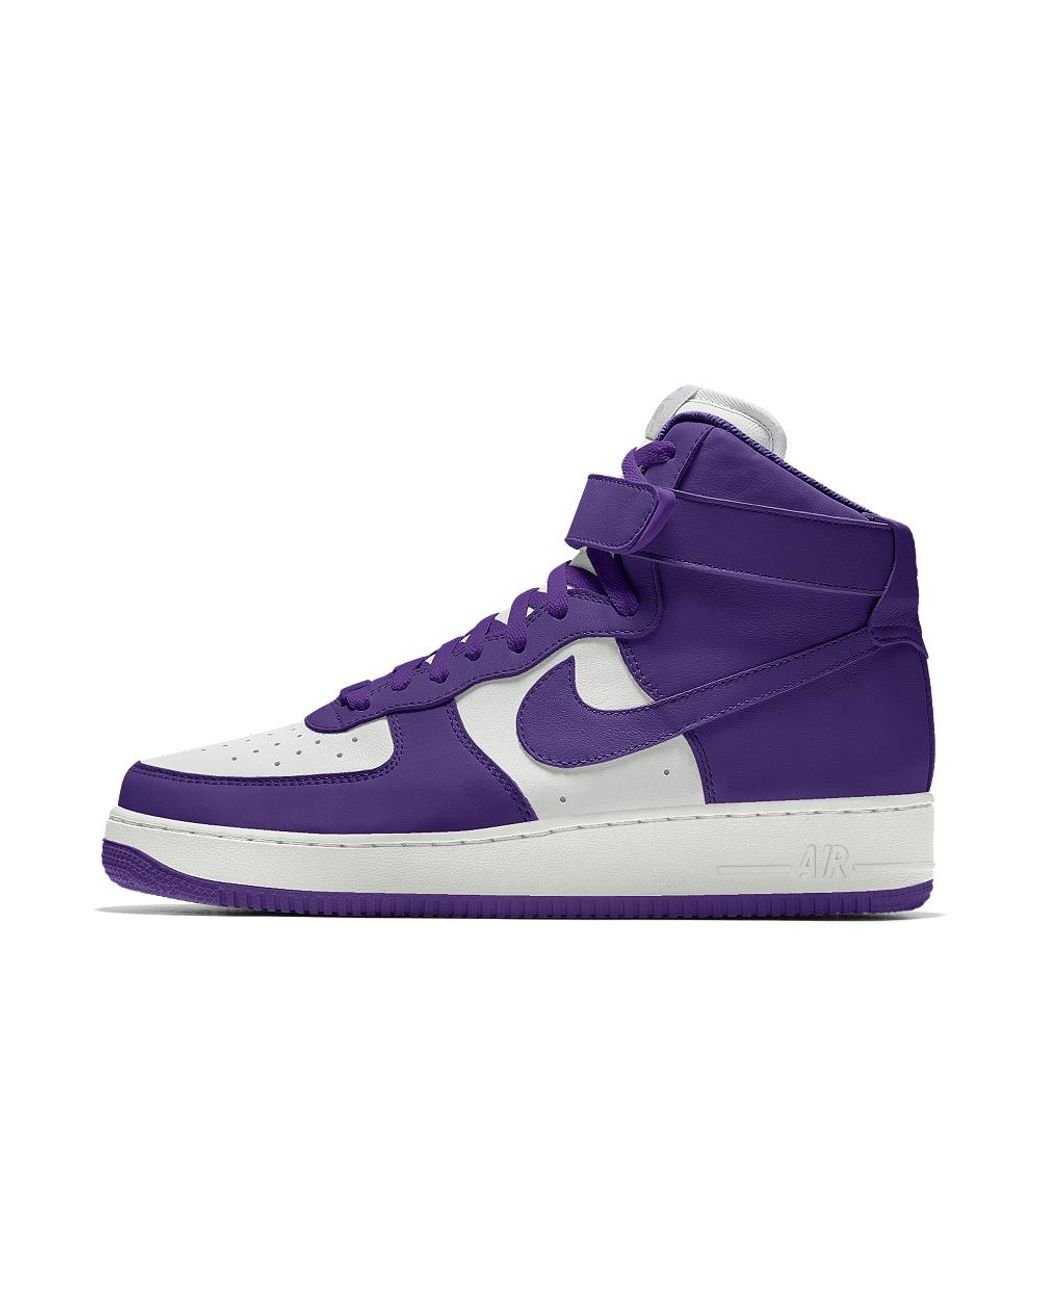 Nike Air Force 1 High Id Women's Shoe in Purple